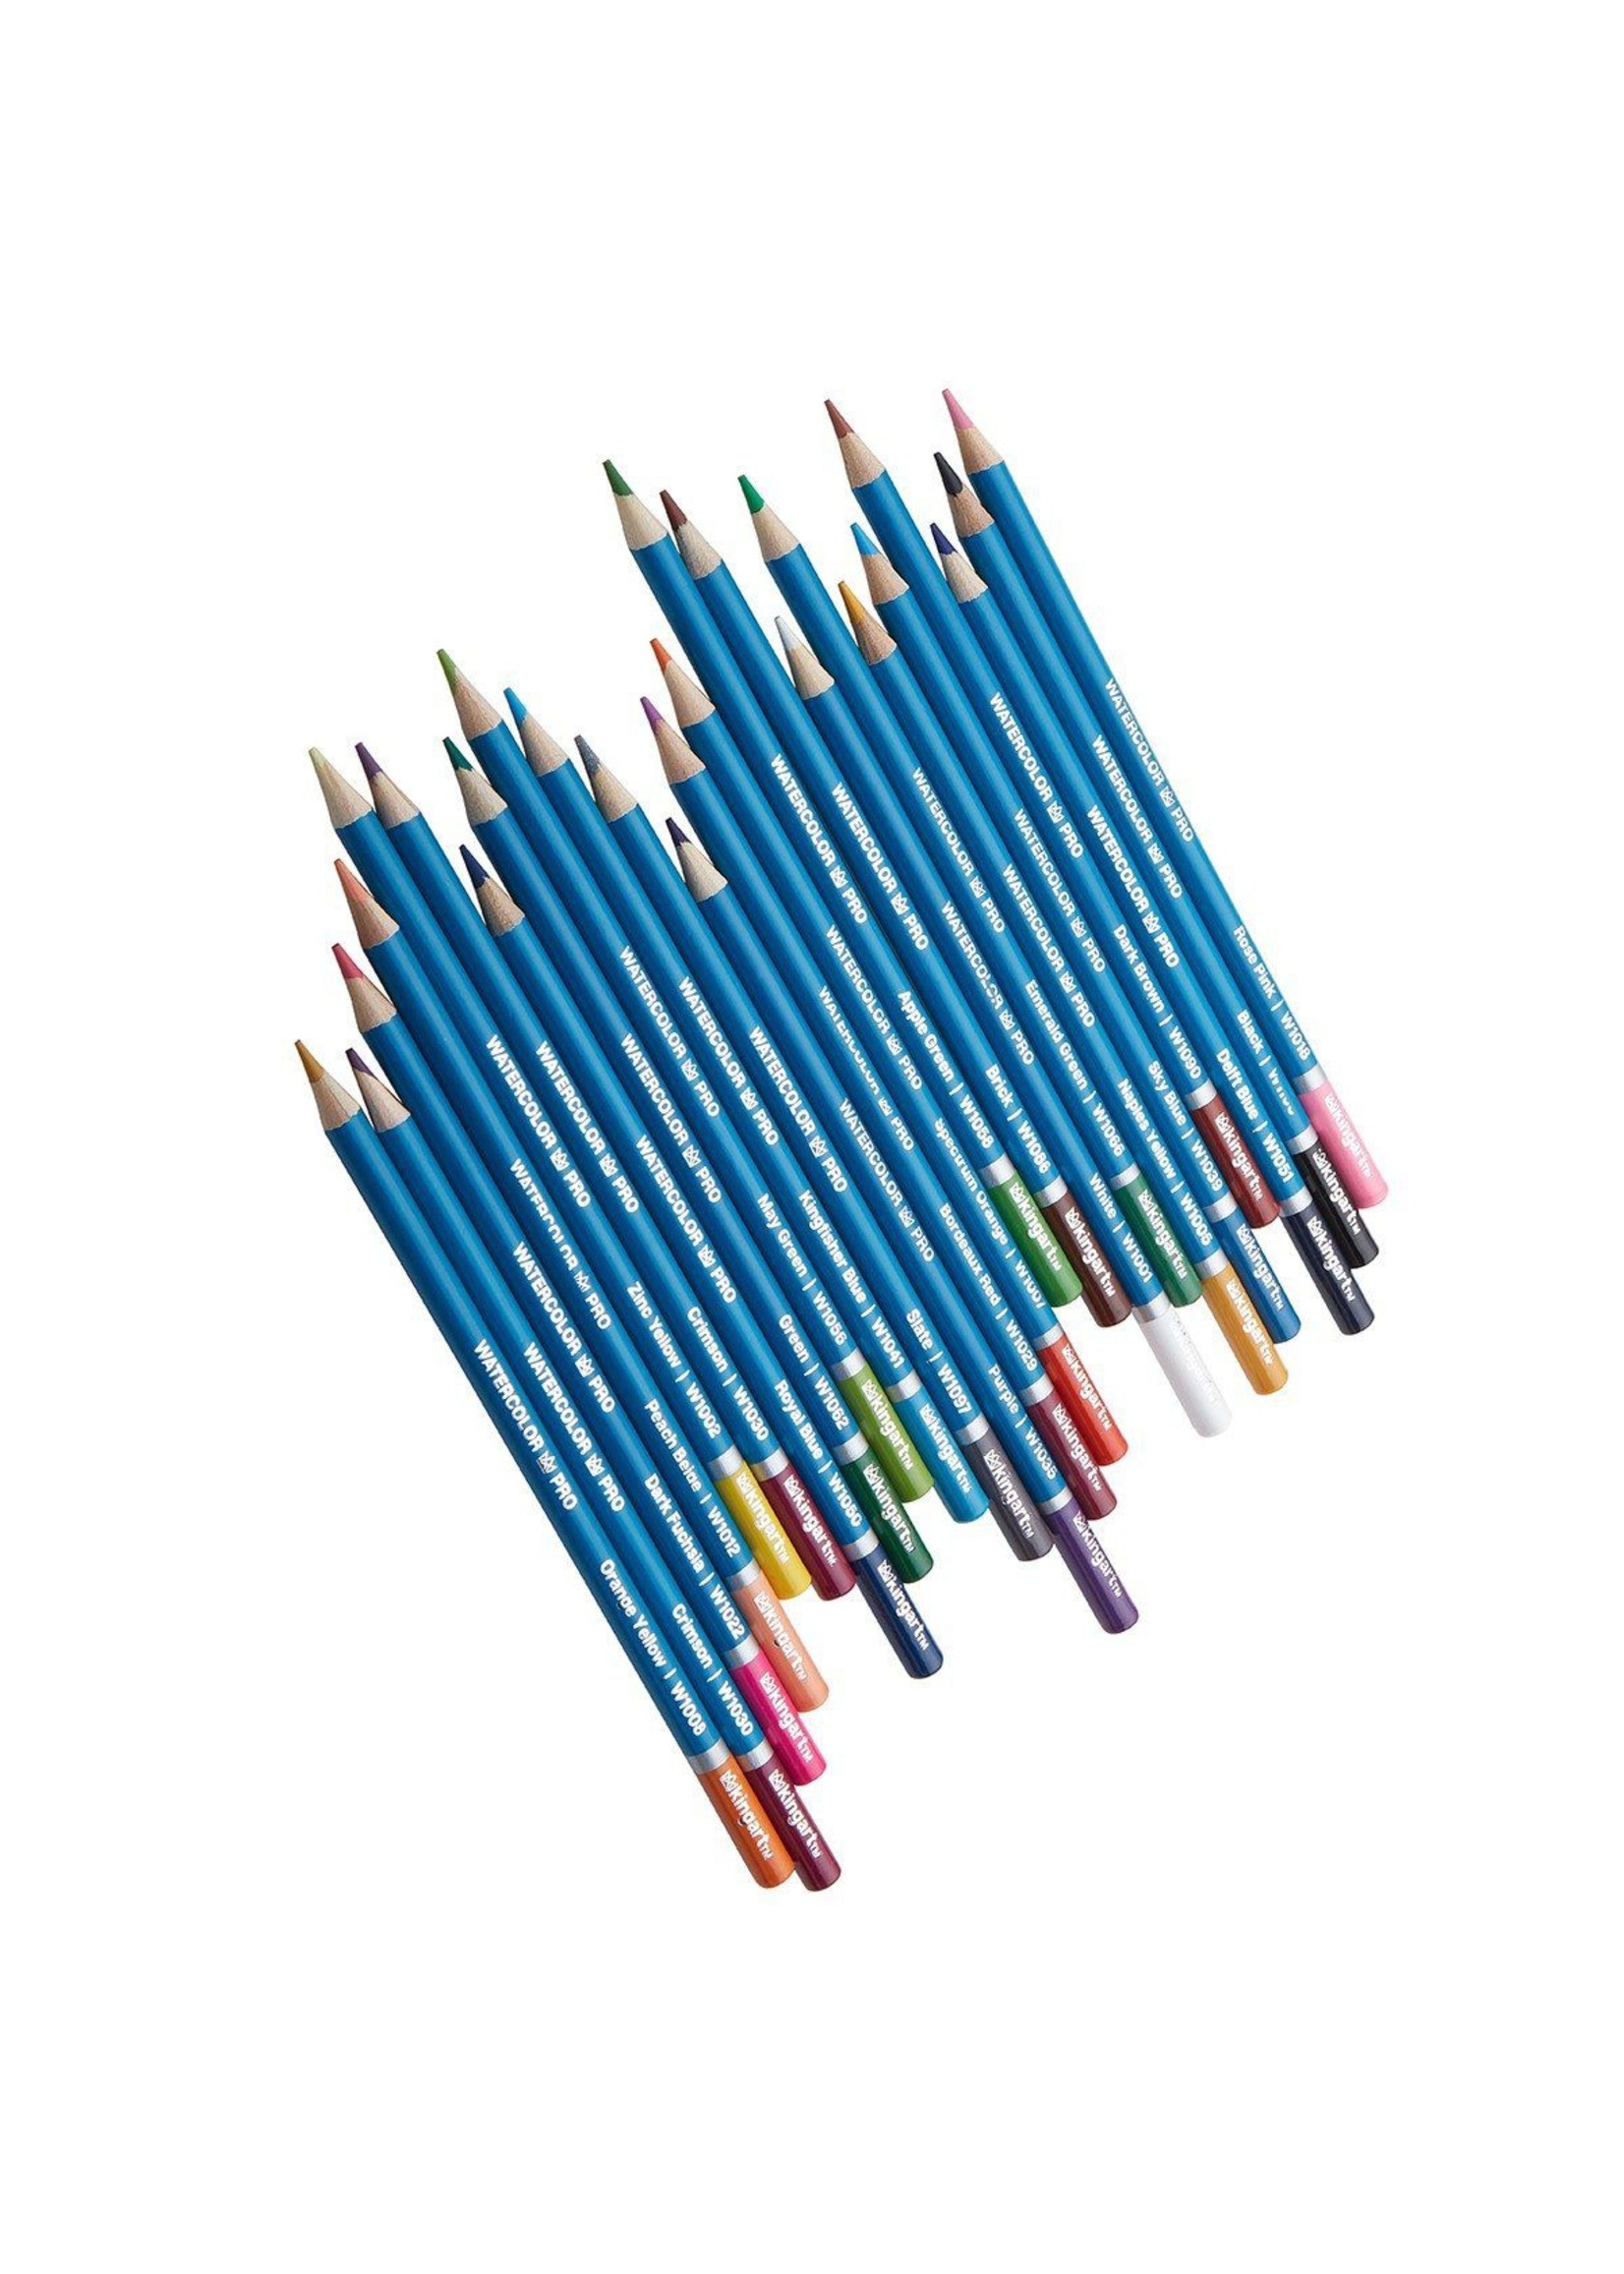 Kingart Watercolor Pencils in Tin - 24 Unique Colors